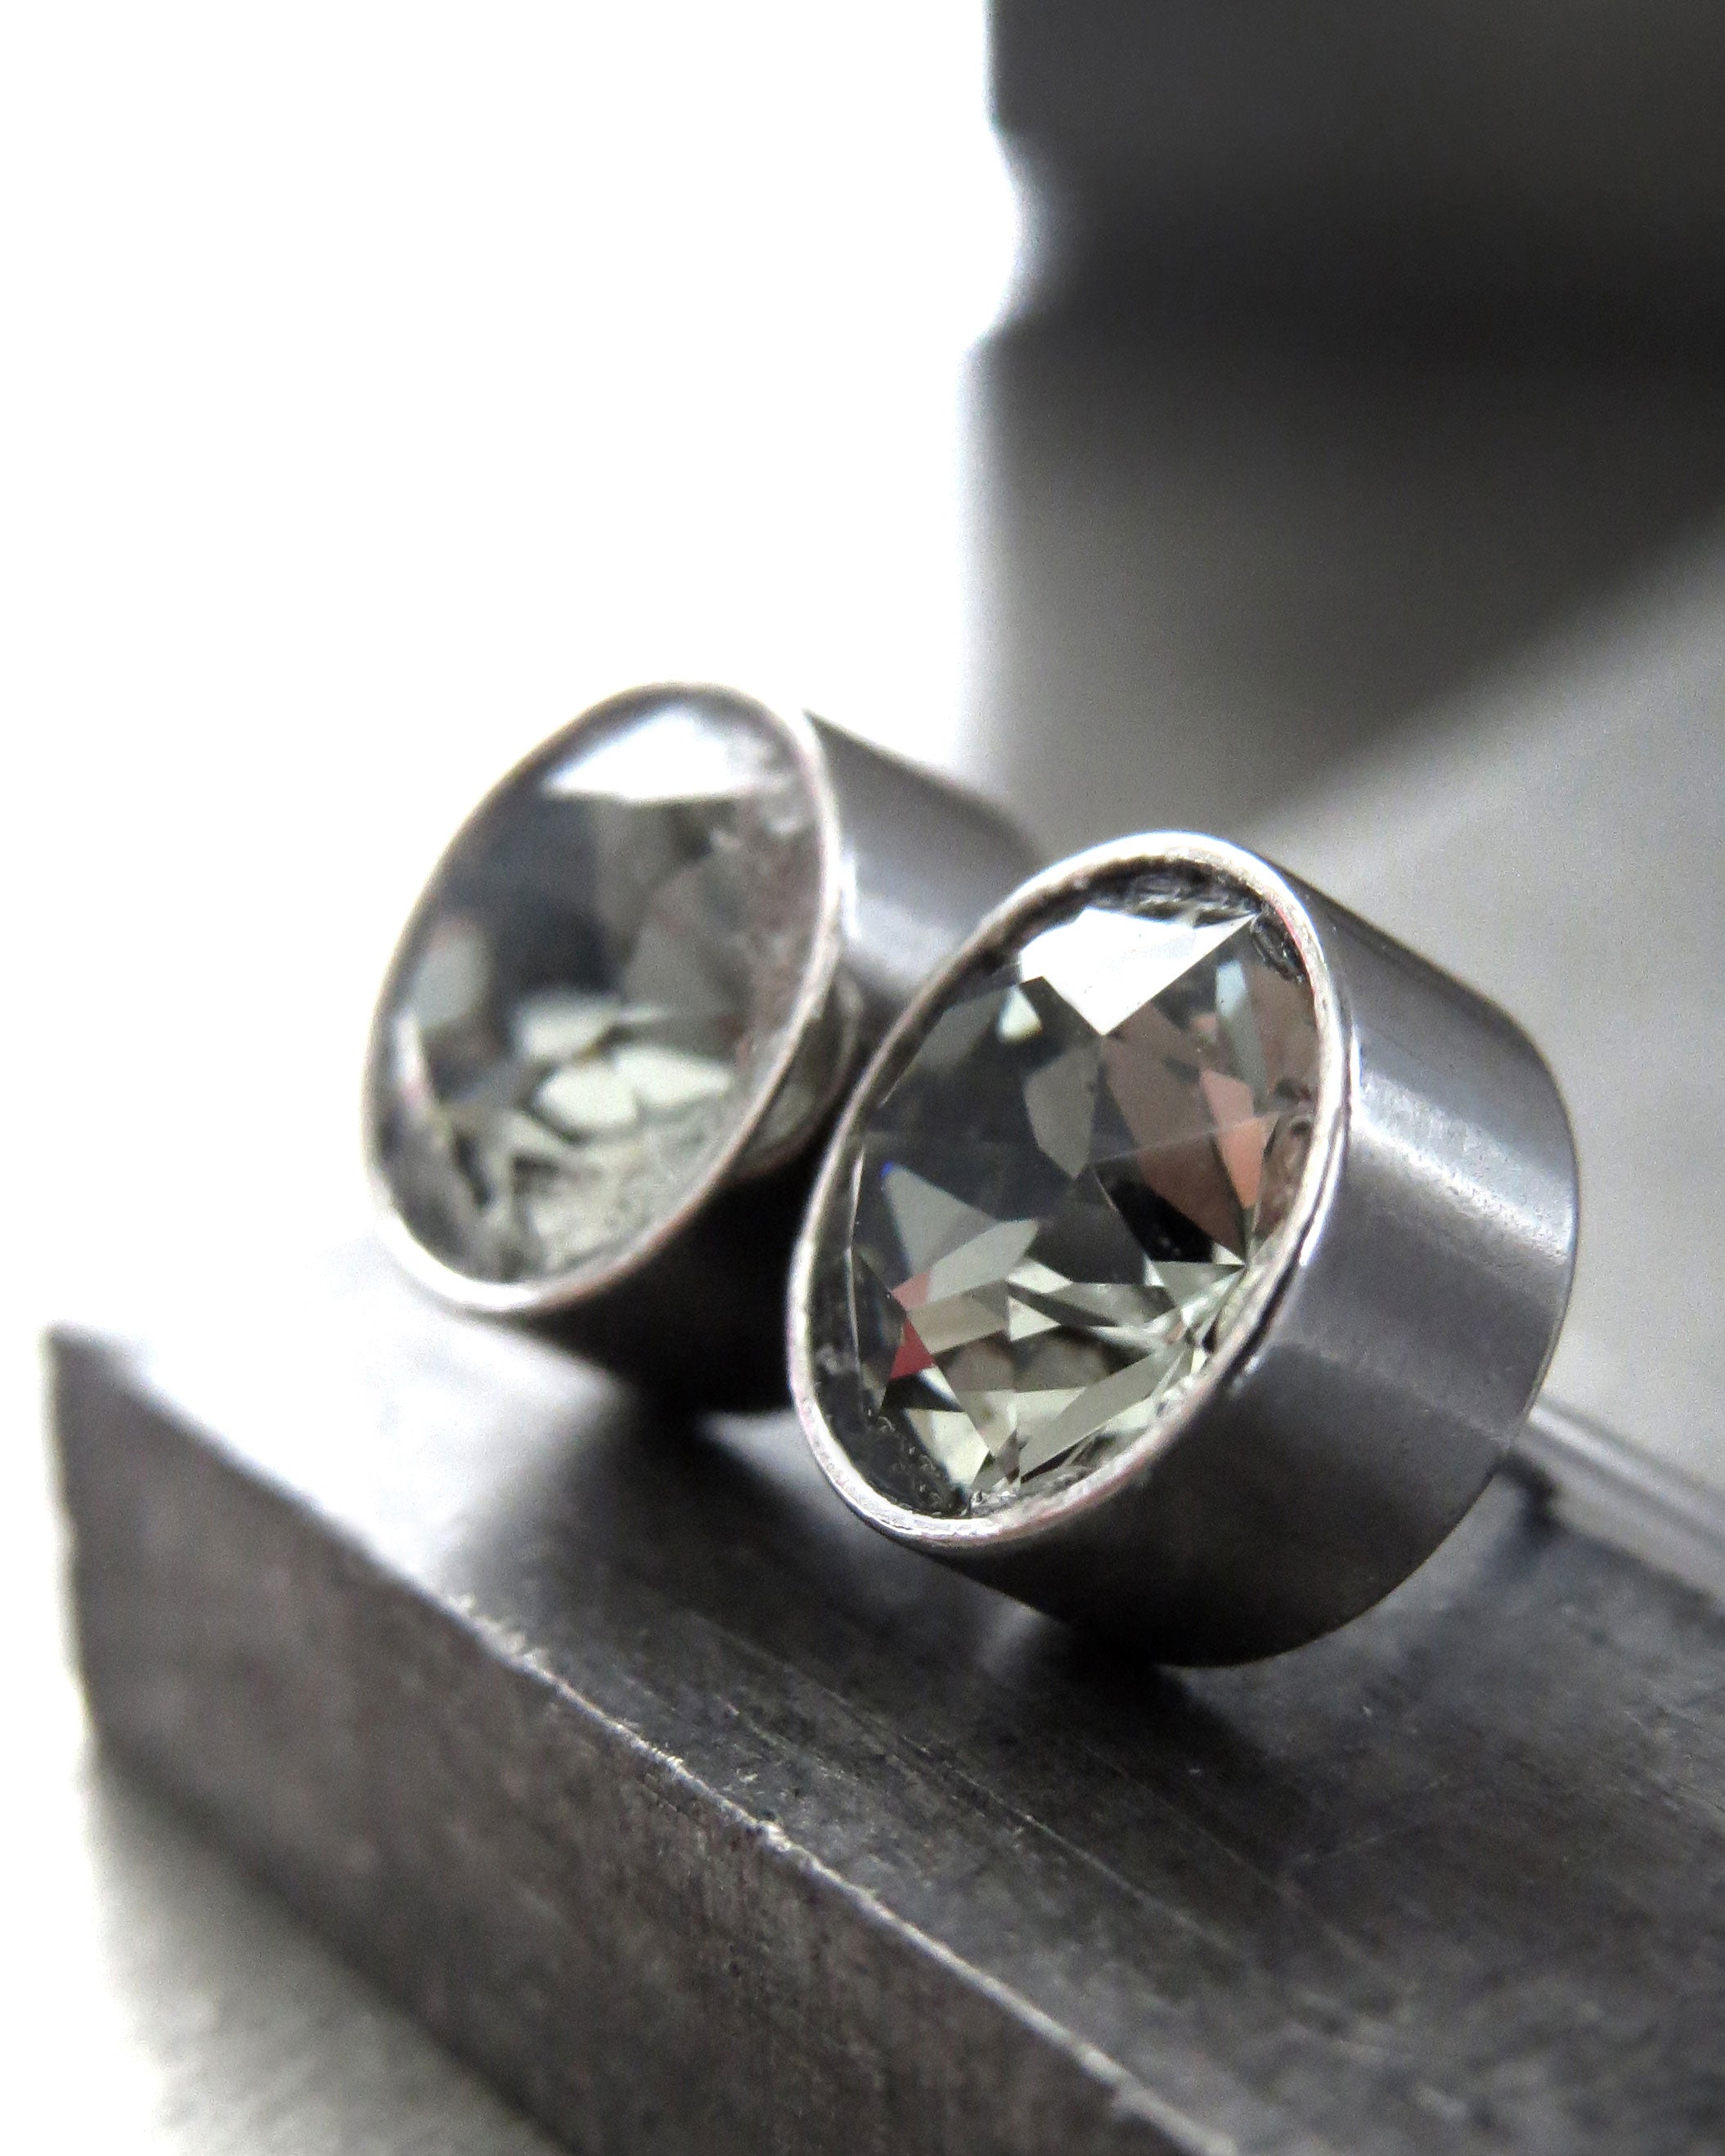 Small Grey Stud Earrings with Black Diamond Crystal